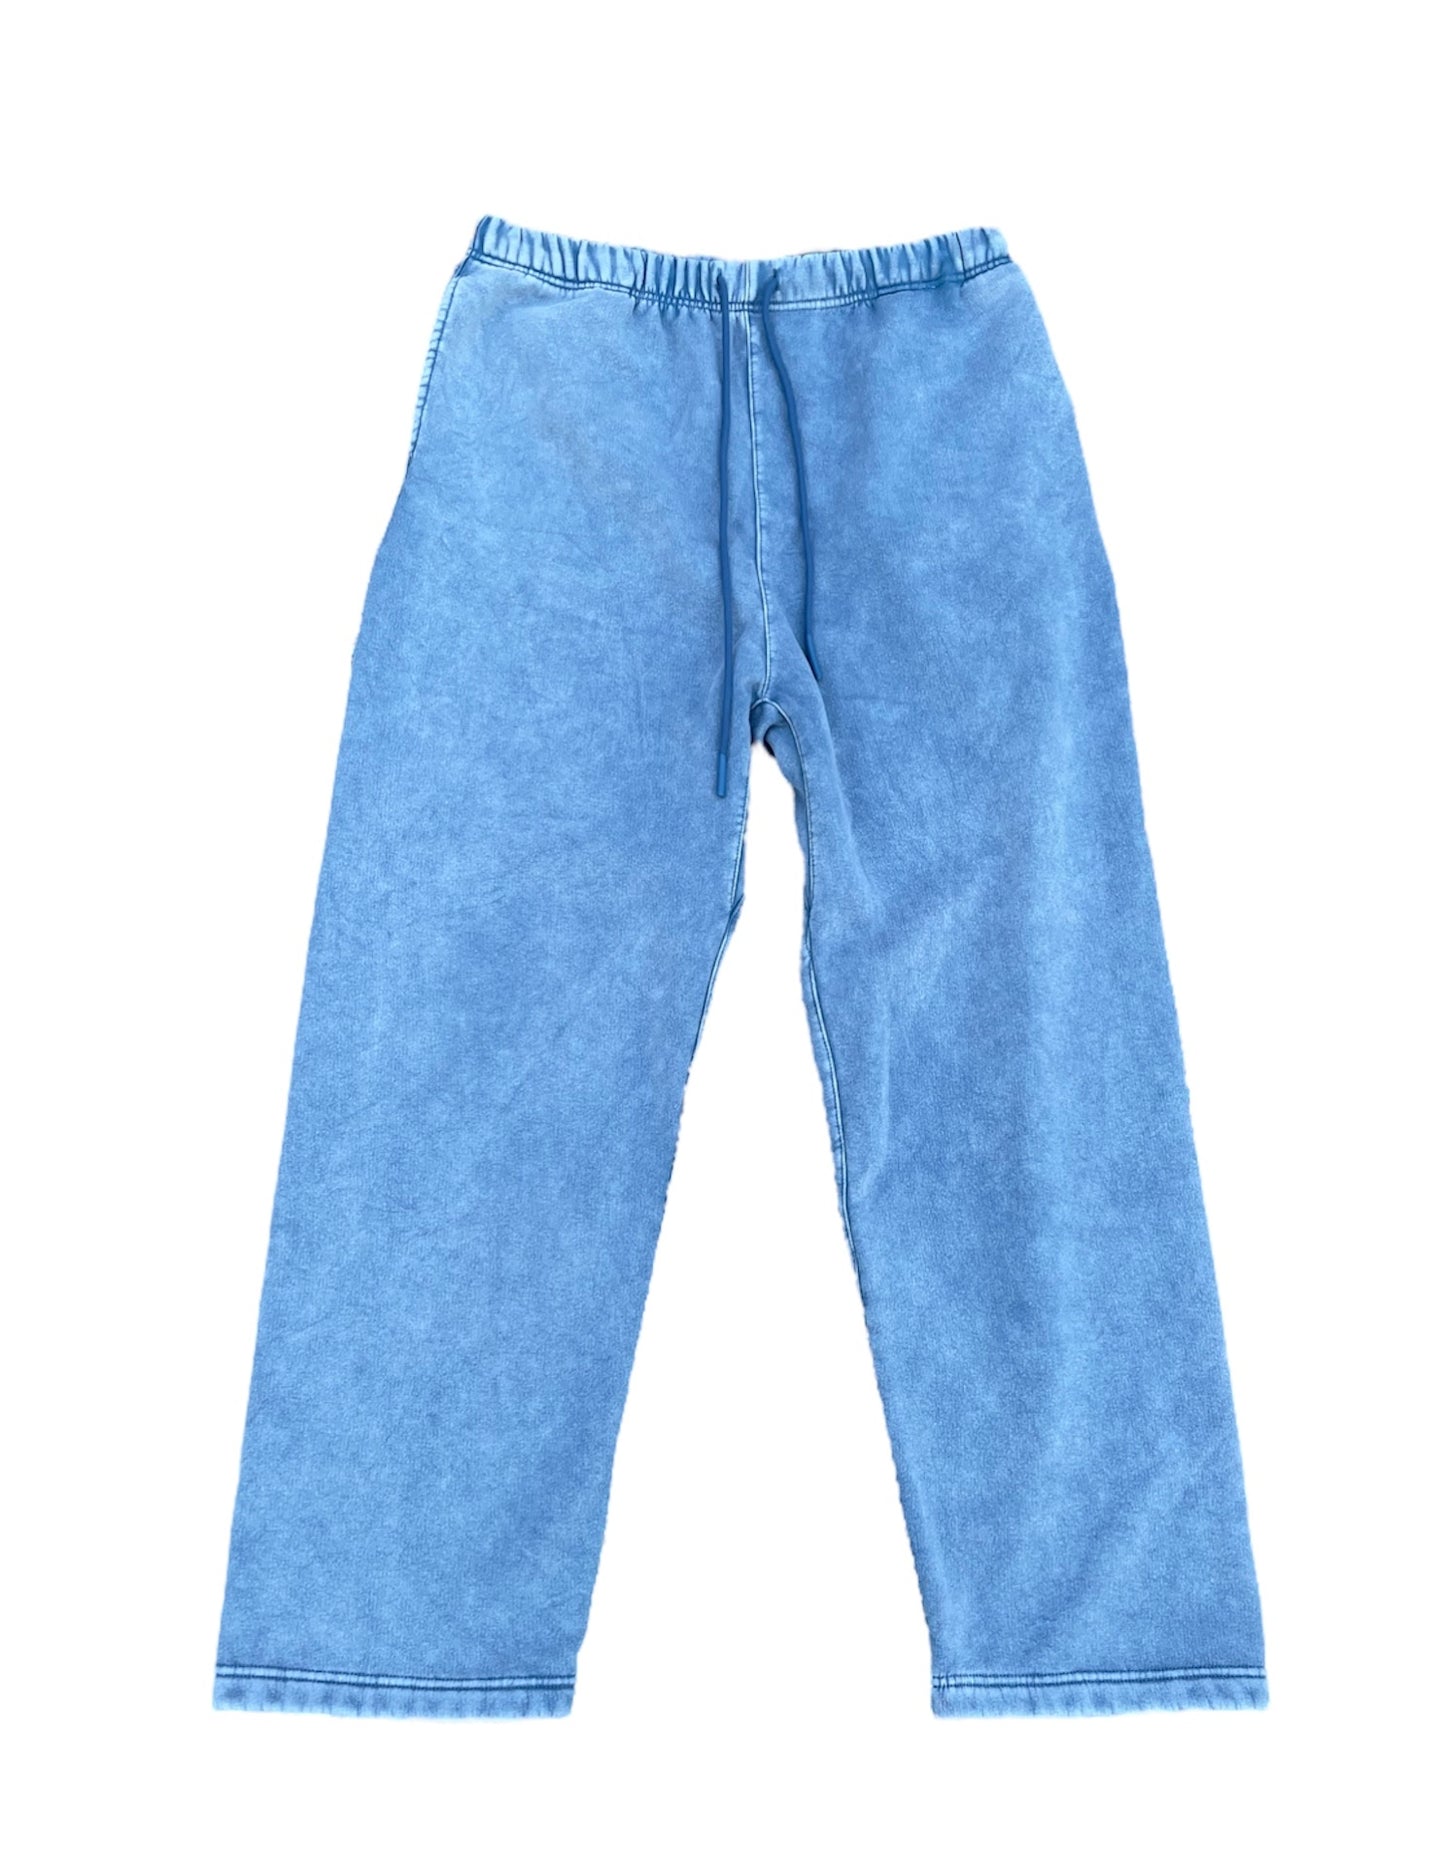 Eazy Blue Pants